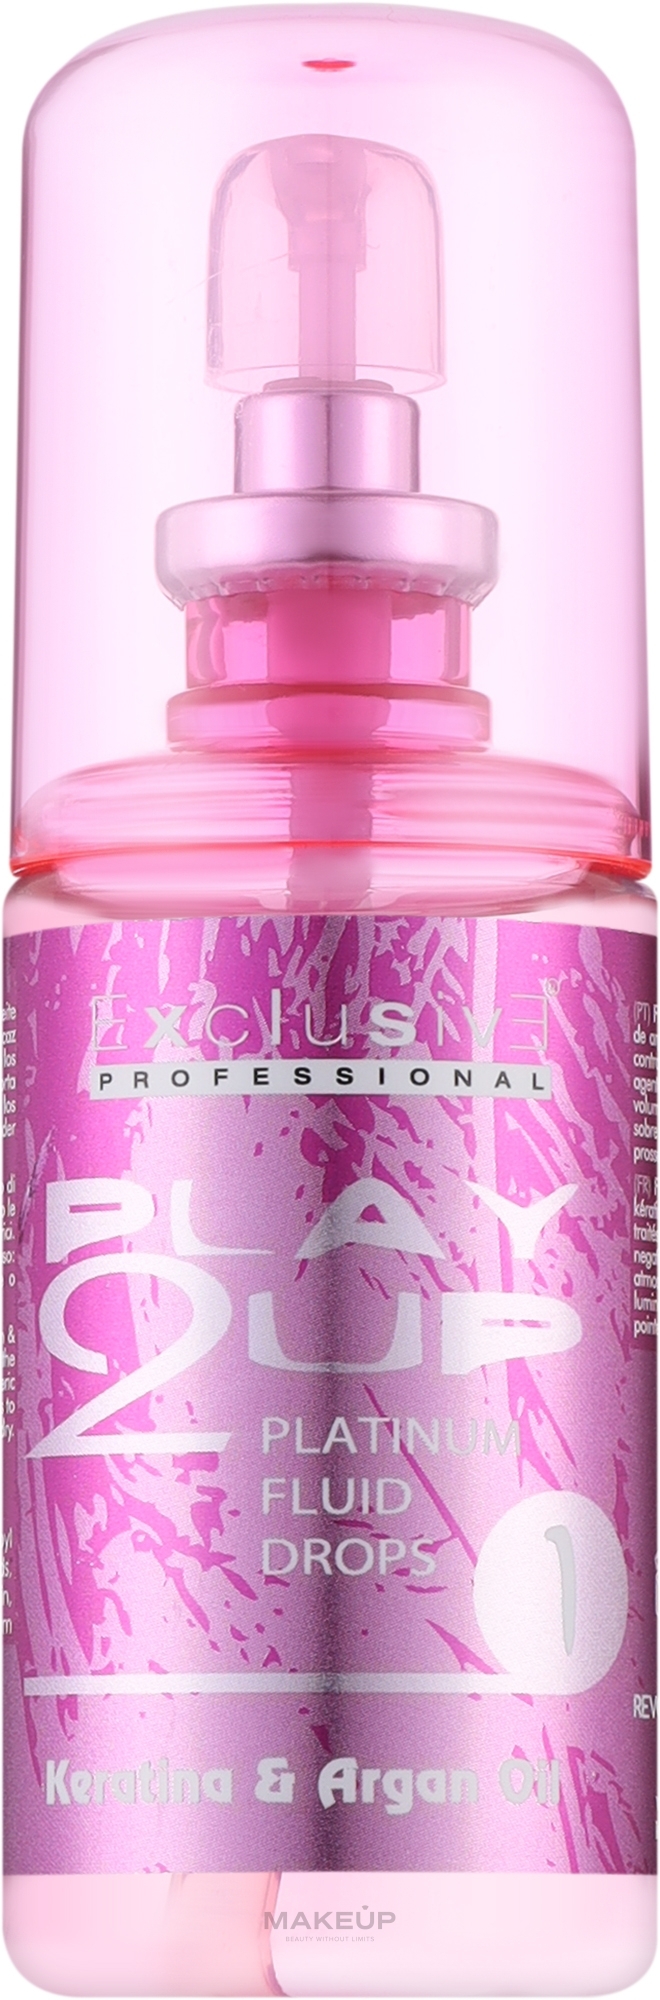 Флюїд для блиску волосся "Кератин і арганова олія" - Exclusive Professional Play2Up Platinum Fluid Drops — фото 80ml